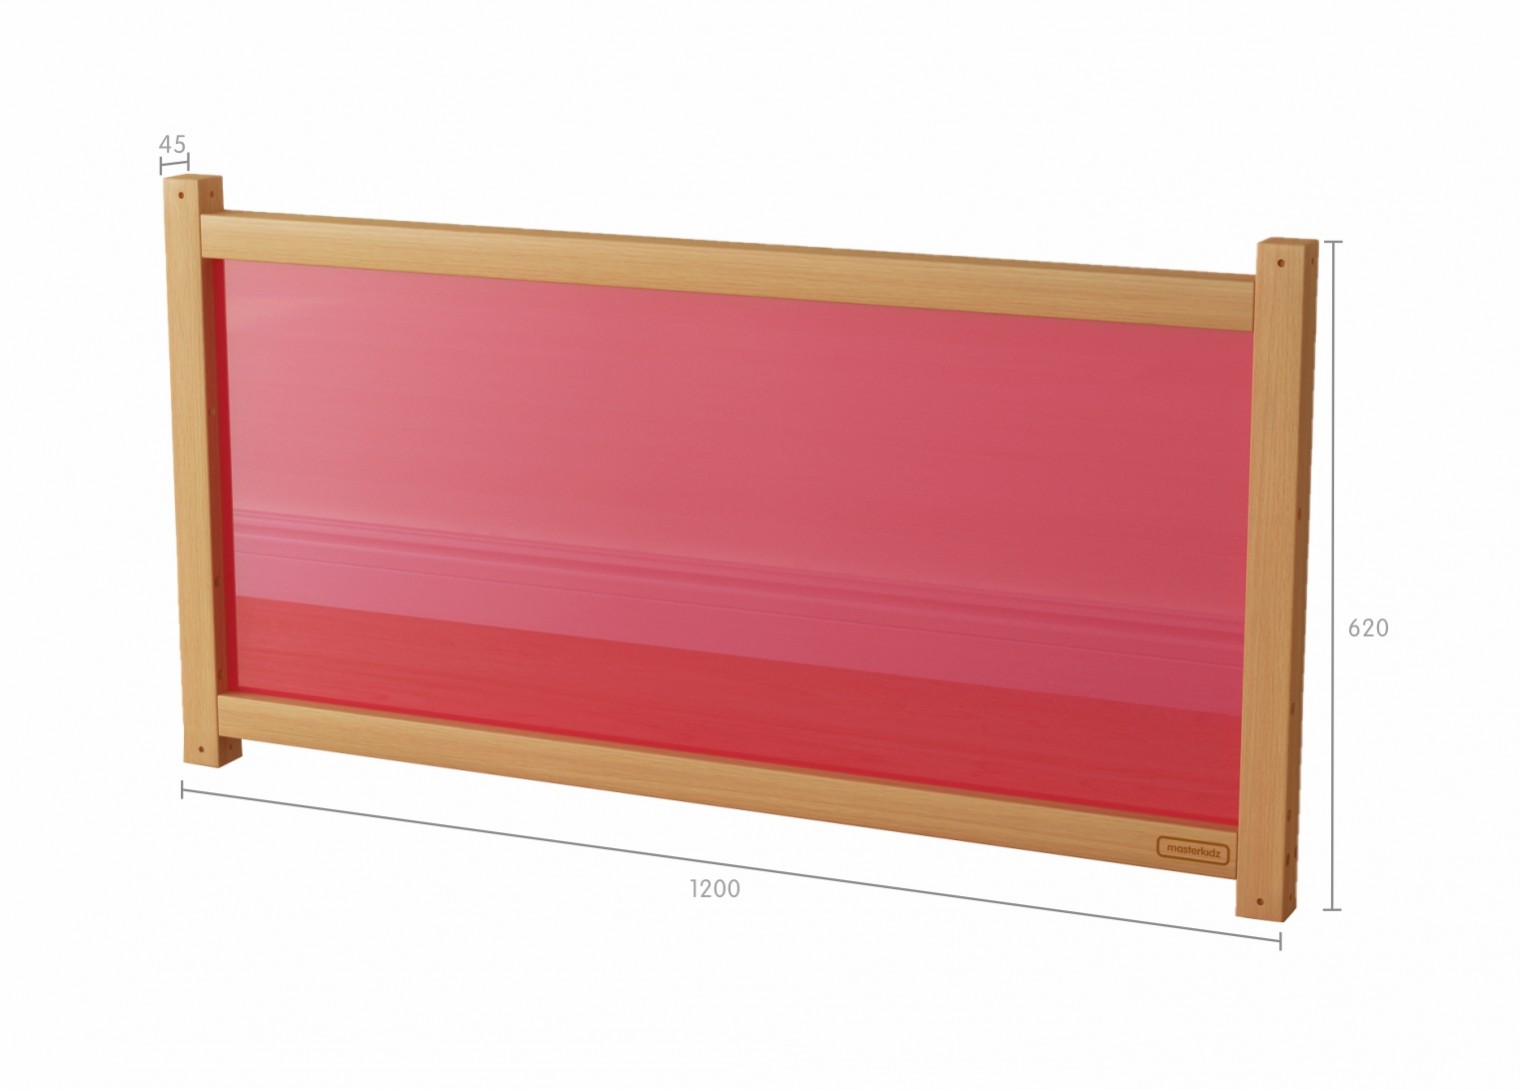 620H x 1200L Divider Panel - Translucent Red